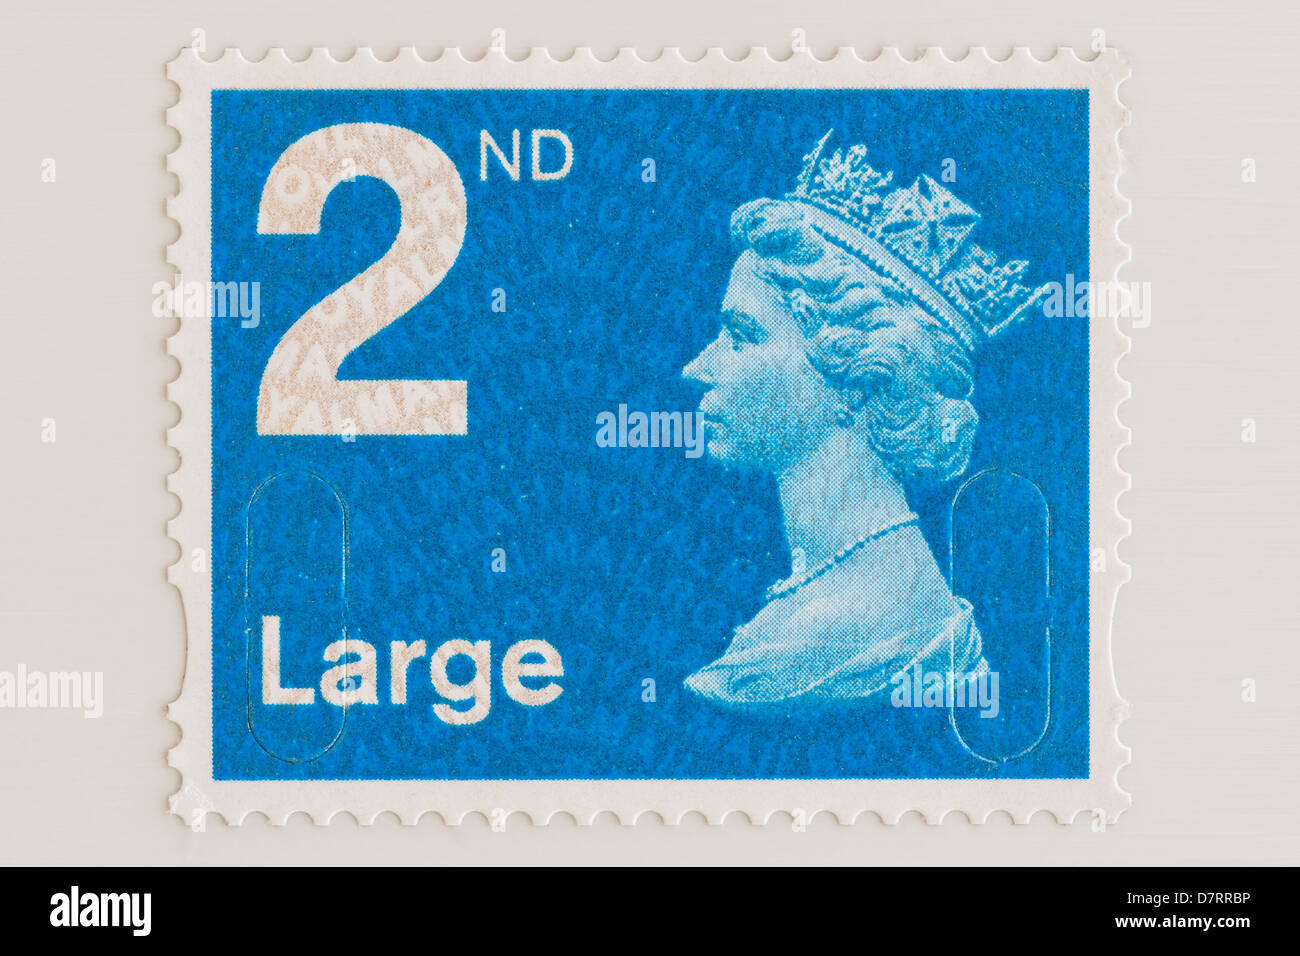 Royal Mail 2. Klasse-Briefmarke für Grossbriefe Stockfoto